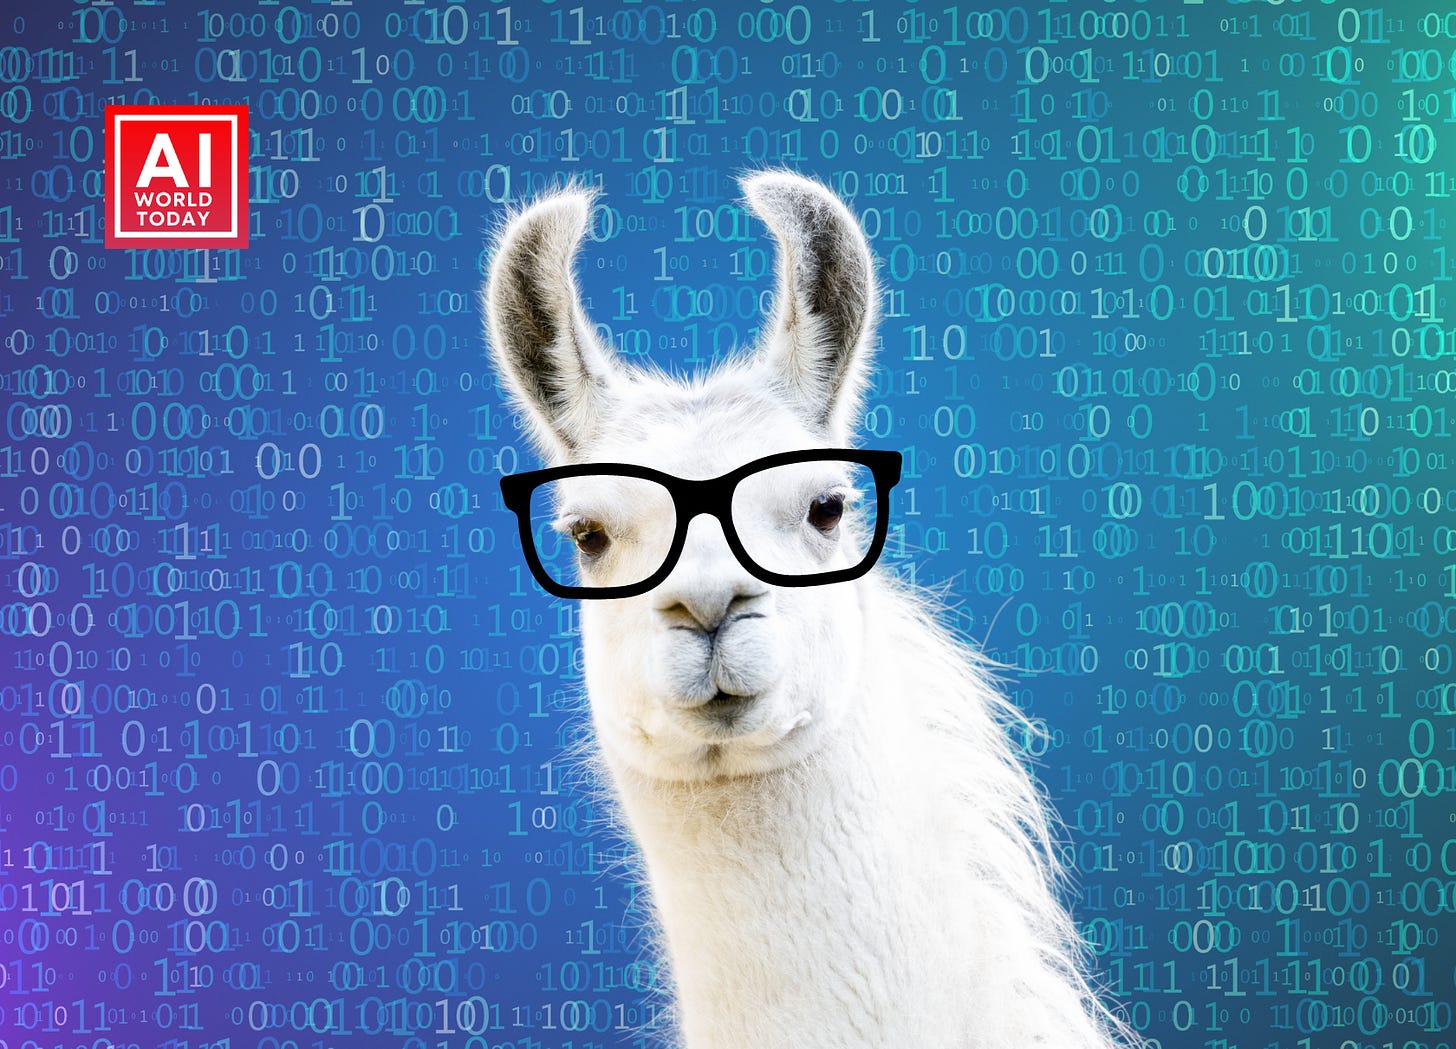 Introducing Code Llama